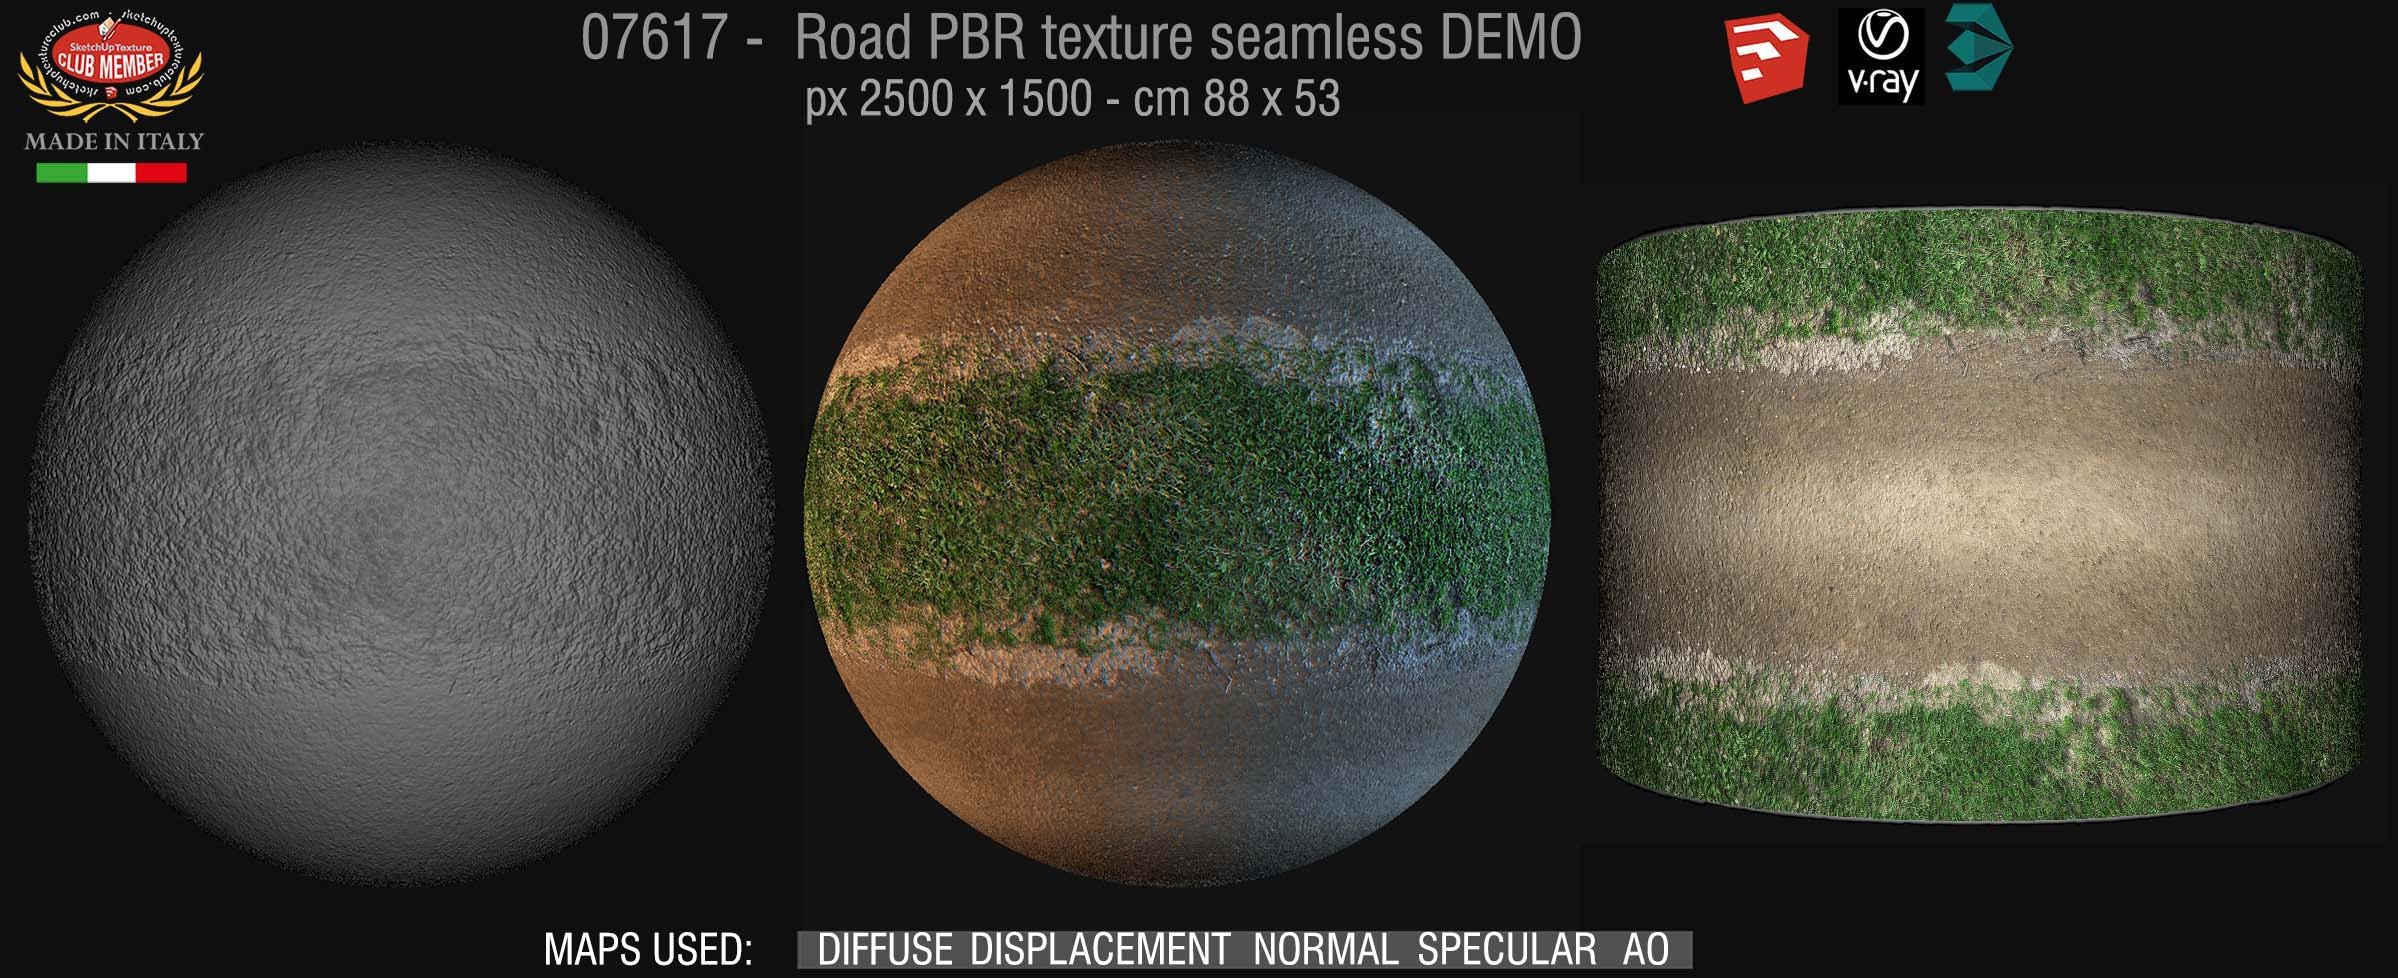 07617 Dirt road PBR texture seamless DEMO